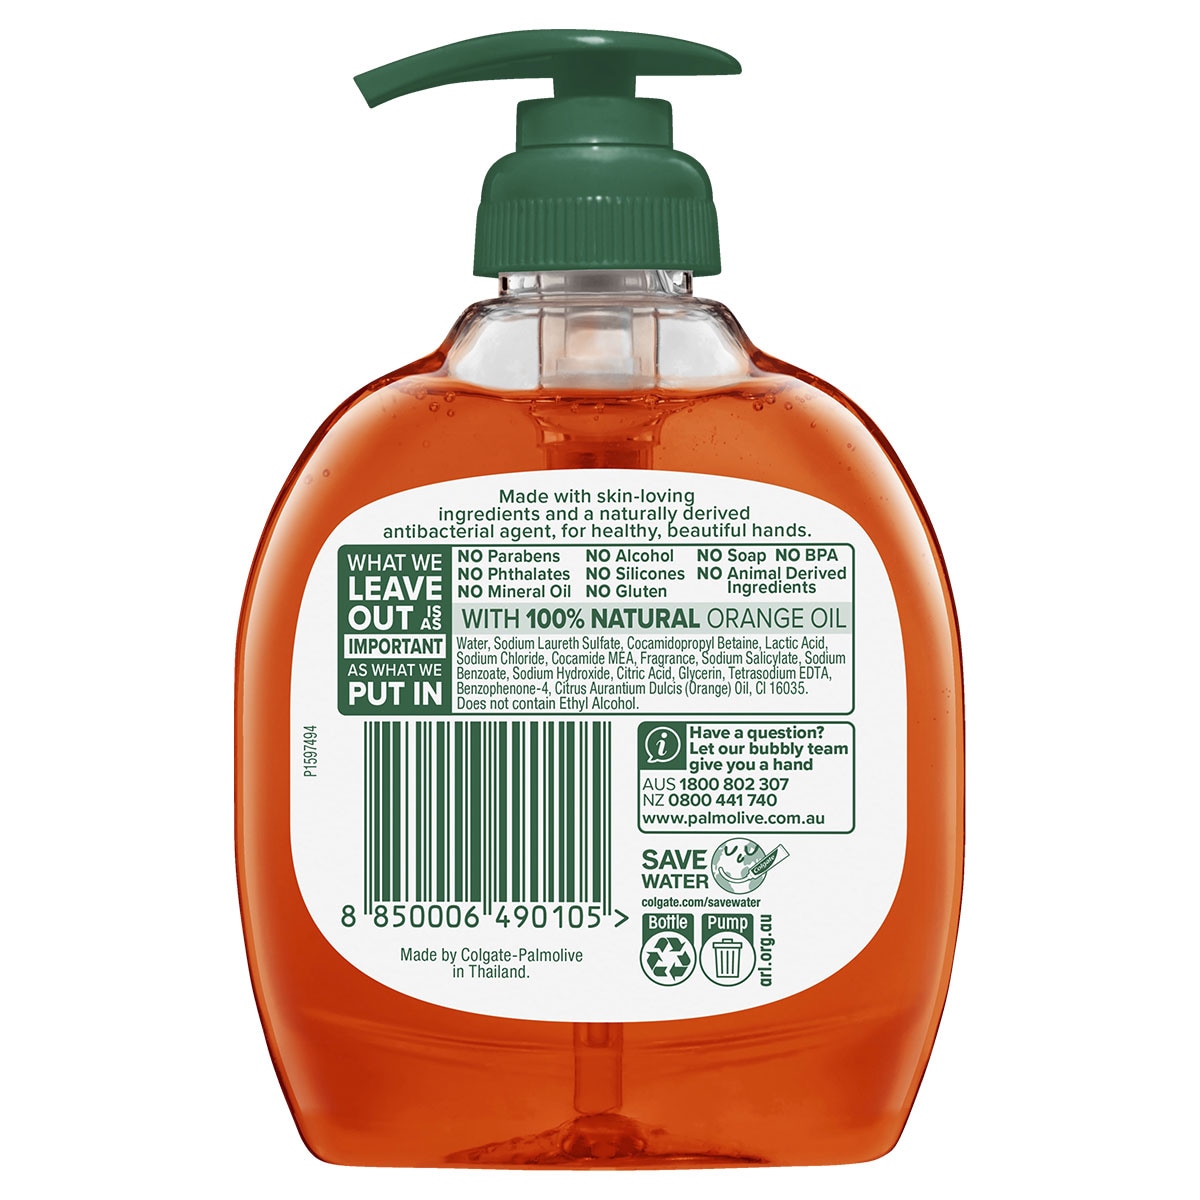 Palmolive Antibacterial 2-Hour Defence Hand Wash Orange 250ml